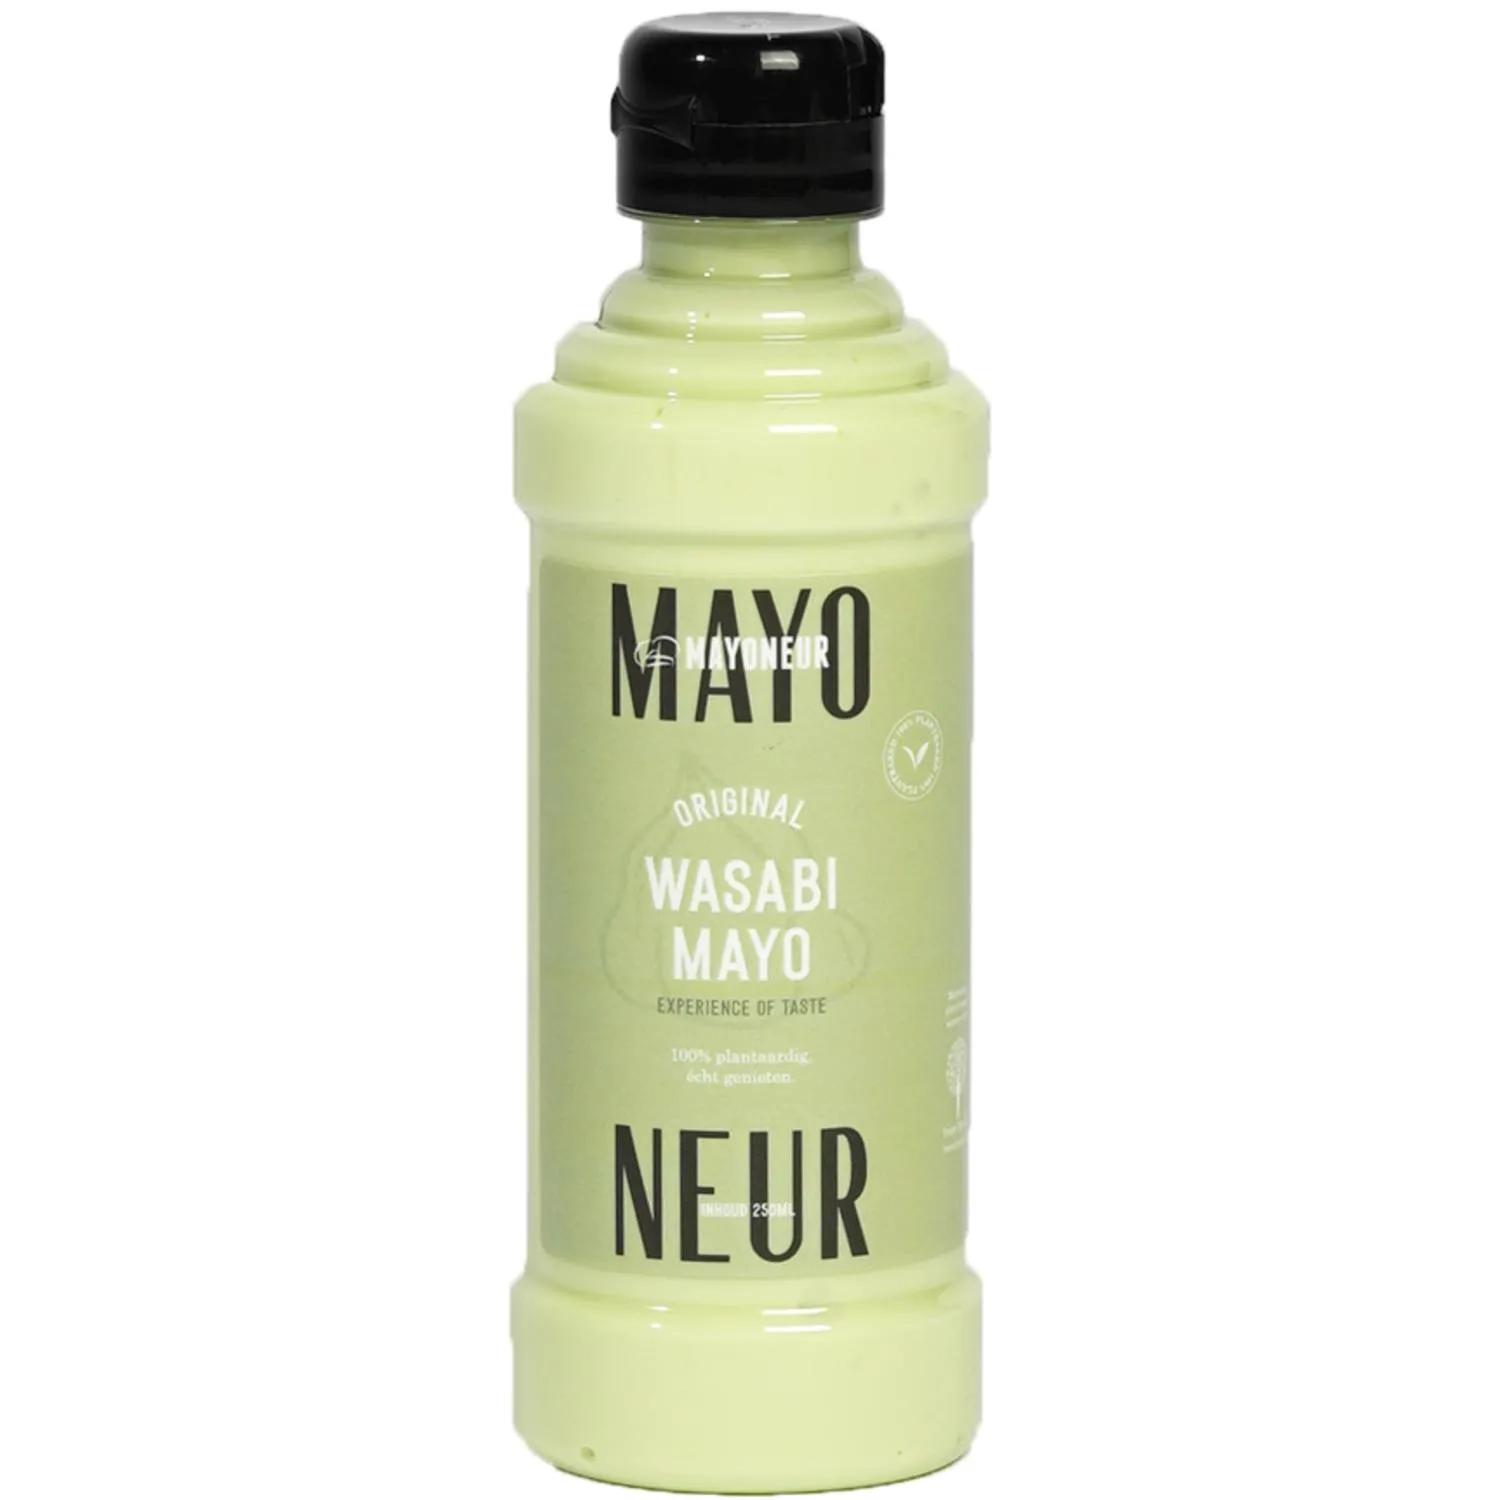 Mayoneur wasabi mayo - Vegan Wiki